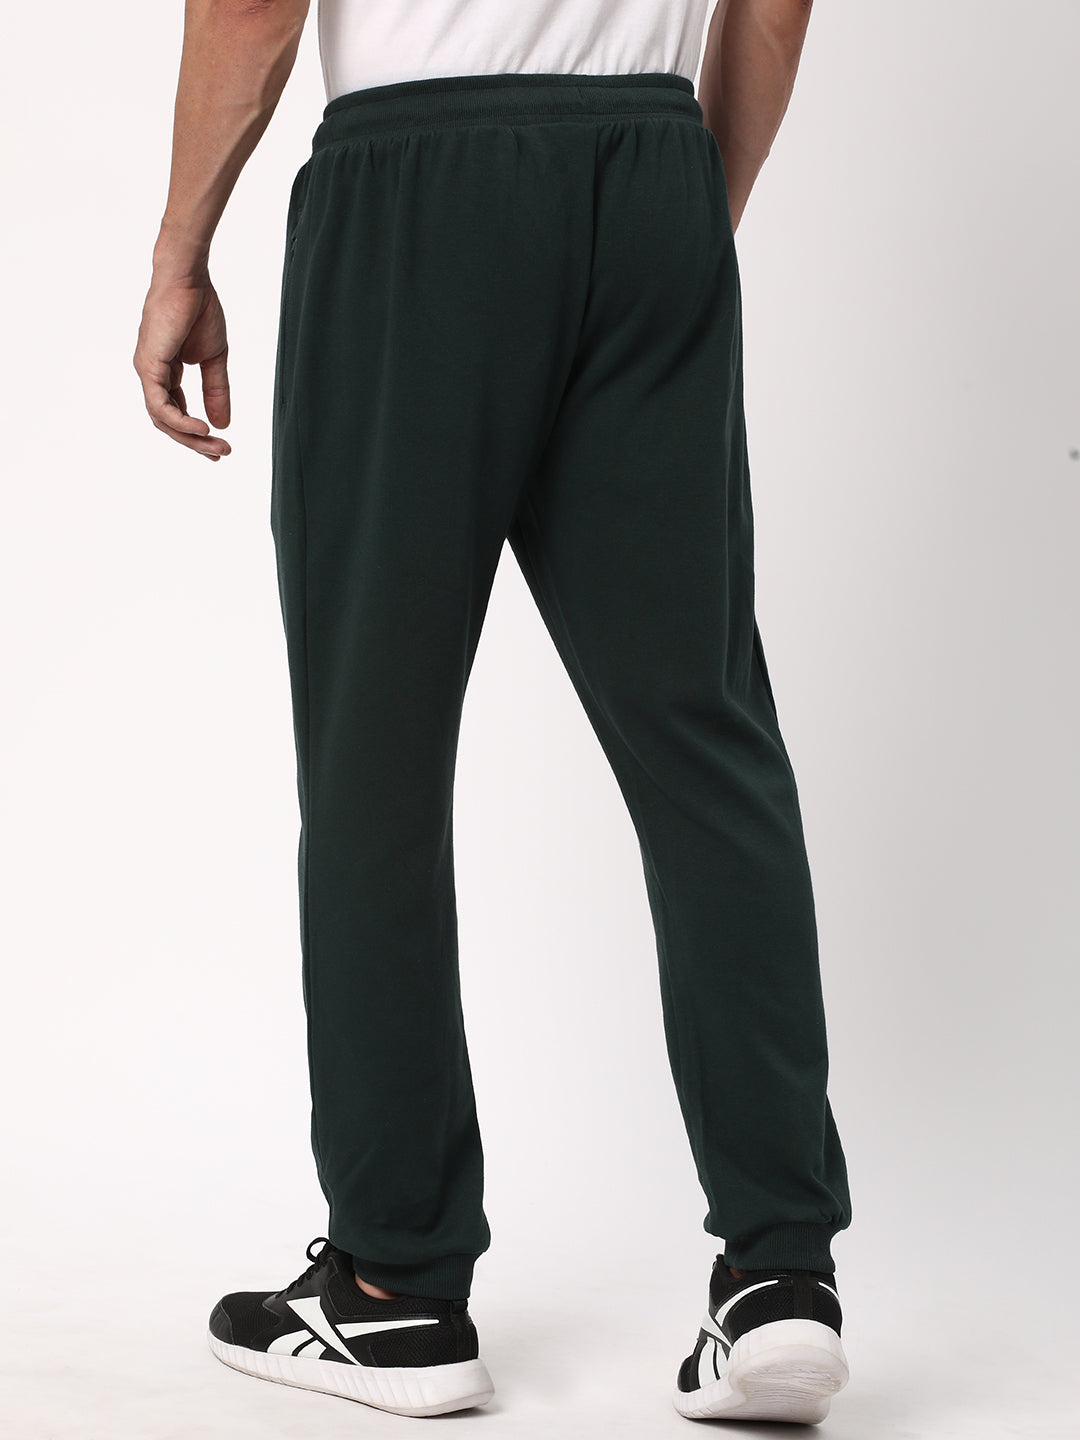 Golf Pants Men Stretch Slim fit Hiking Pants Lightweight Dress Casual  Tapered Zipper Pockets Pack of 2 Black Color